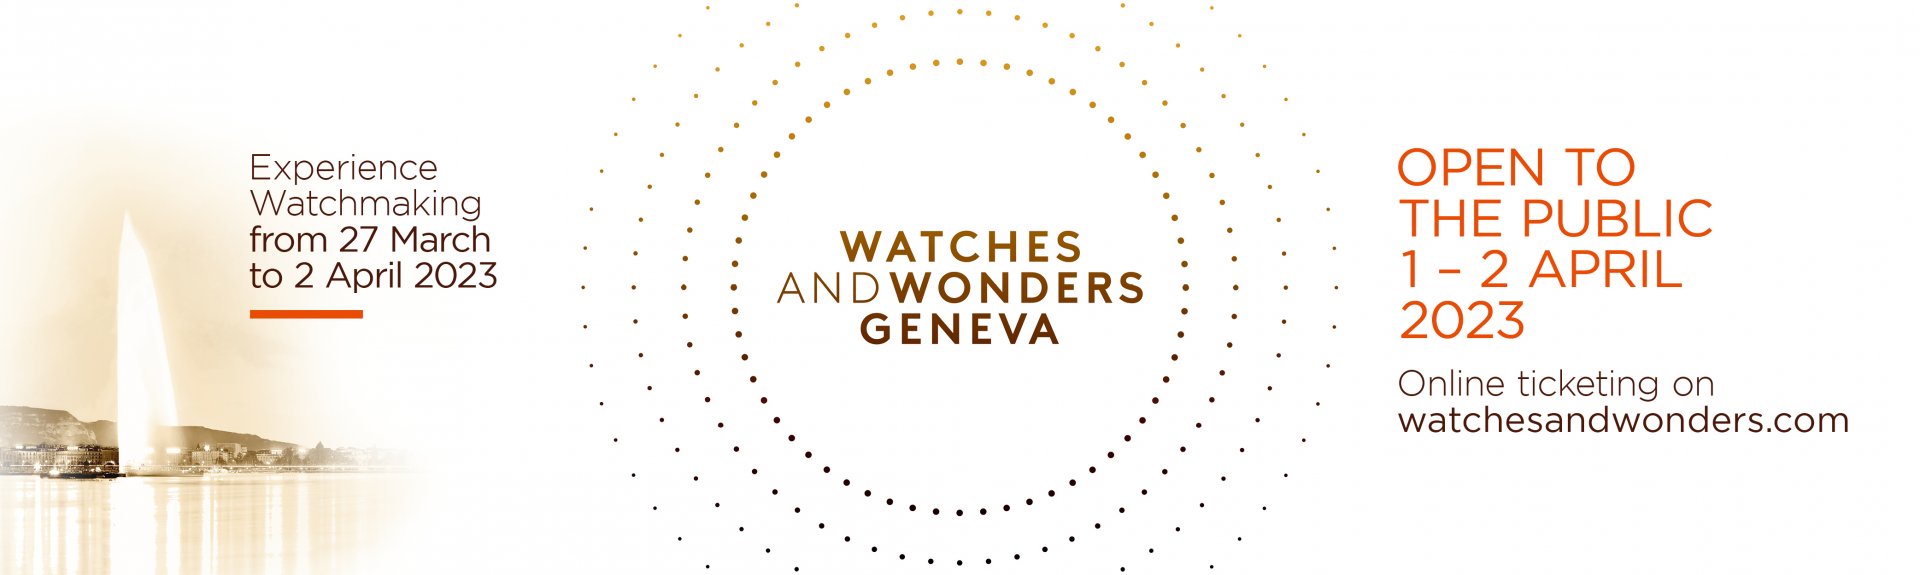 https://www.watchesandwonders.com/en/geneva-2023/public-days